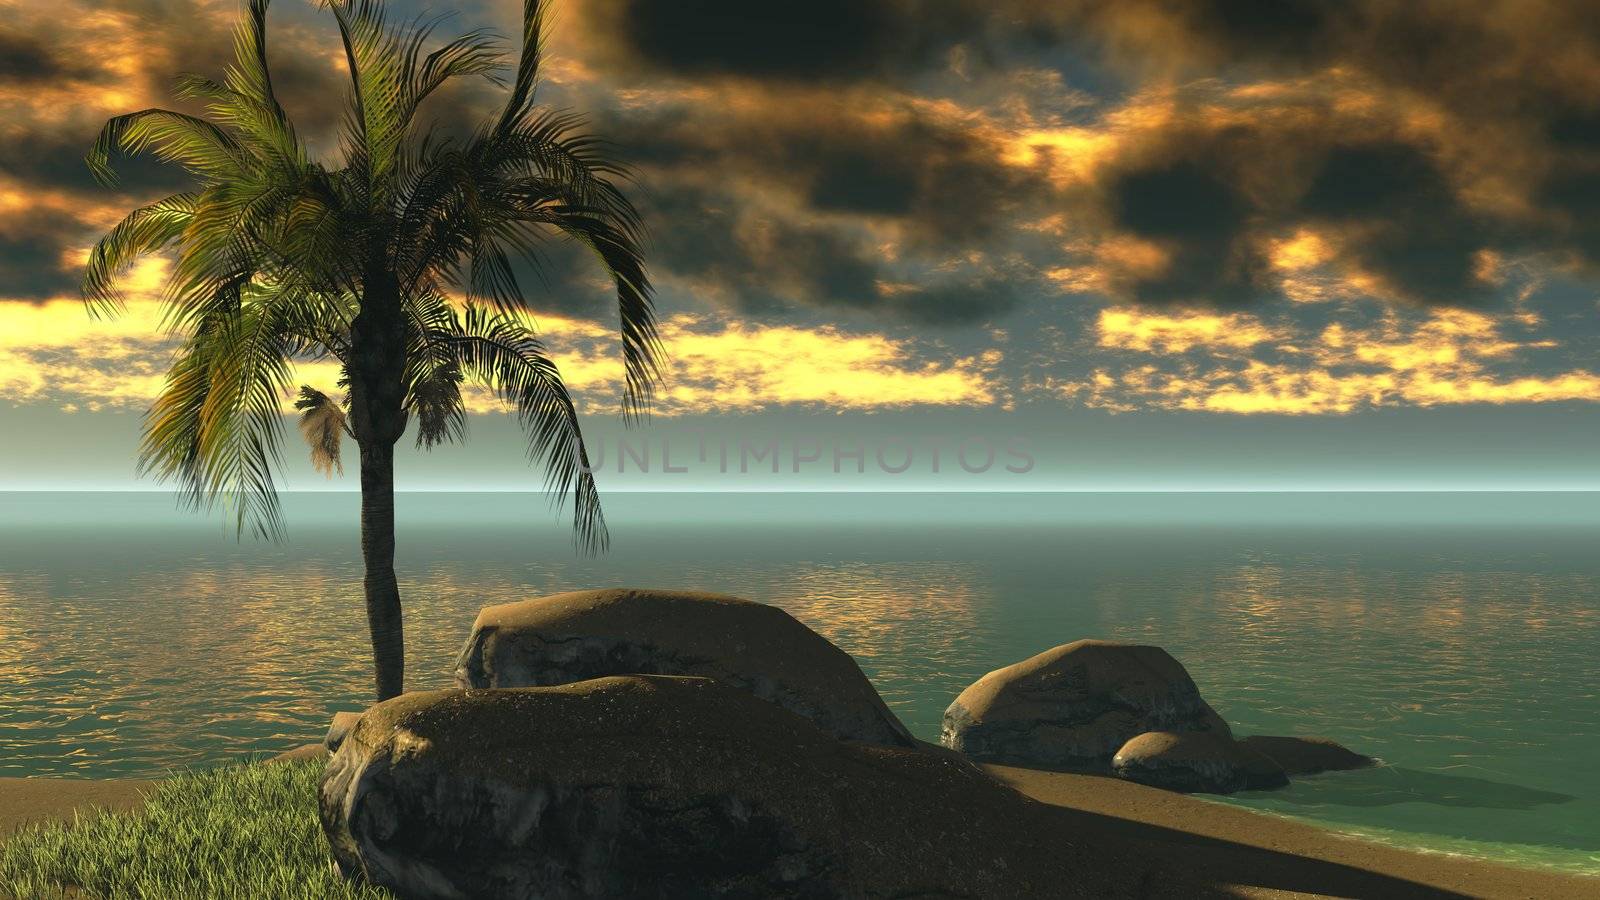 Hawaiian sunset in tropical paradise by andromeda13